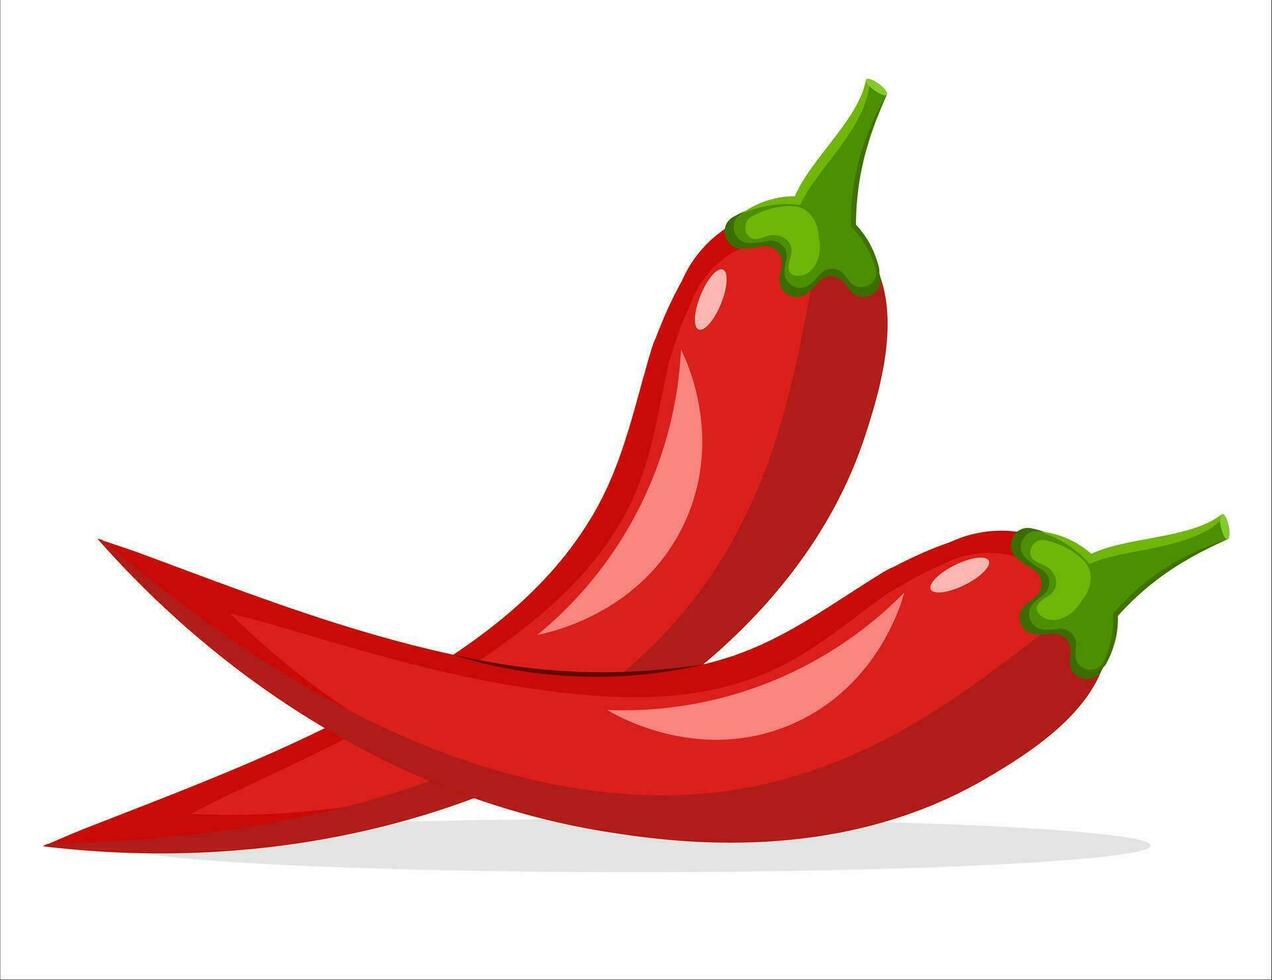 Chili pepper on white background vector